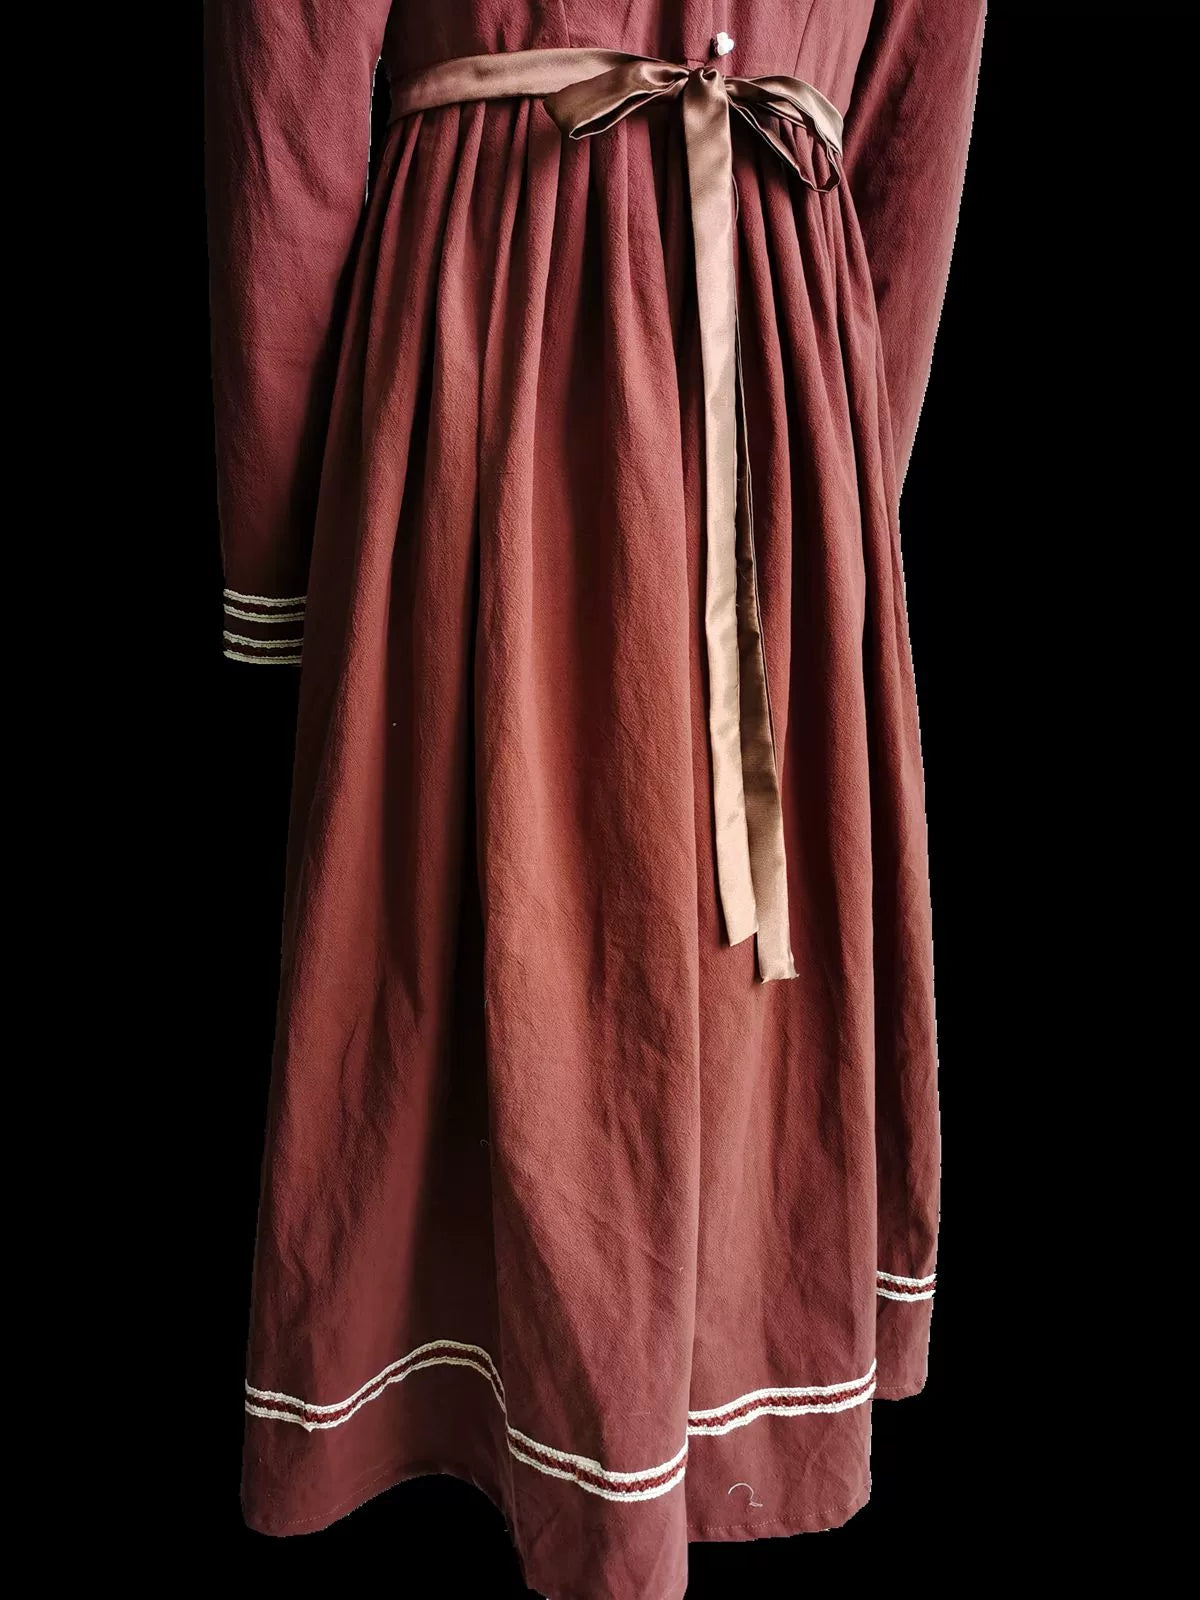 "Pride and Prejudice" Brown Regency Dress